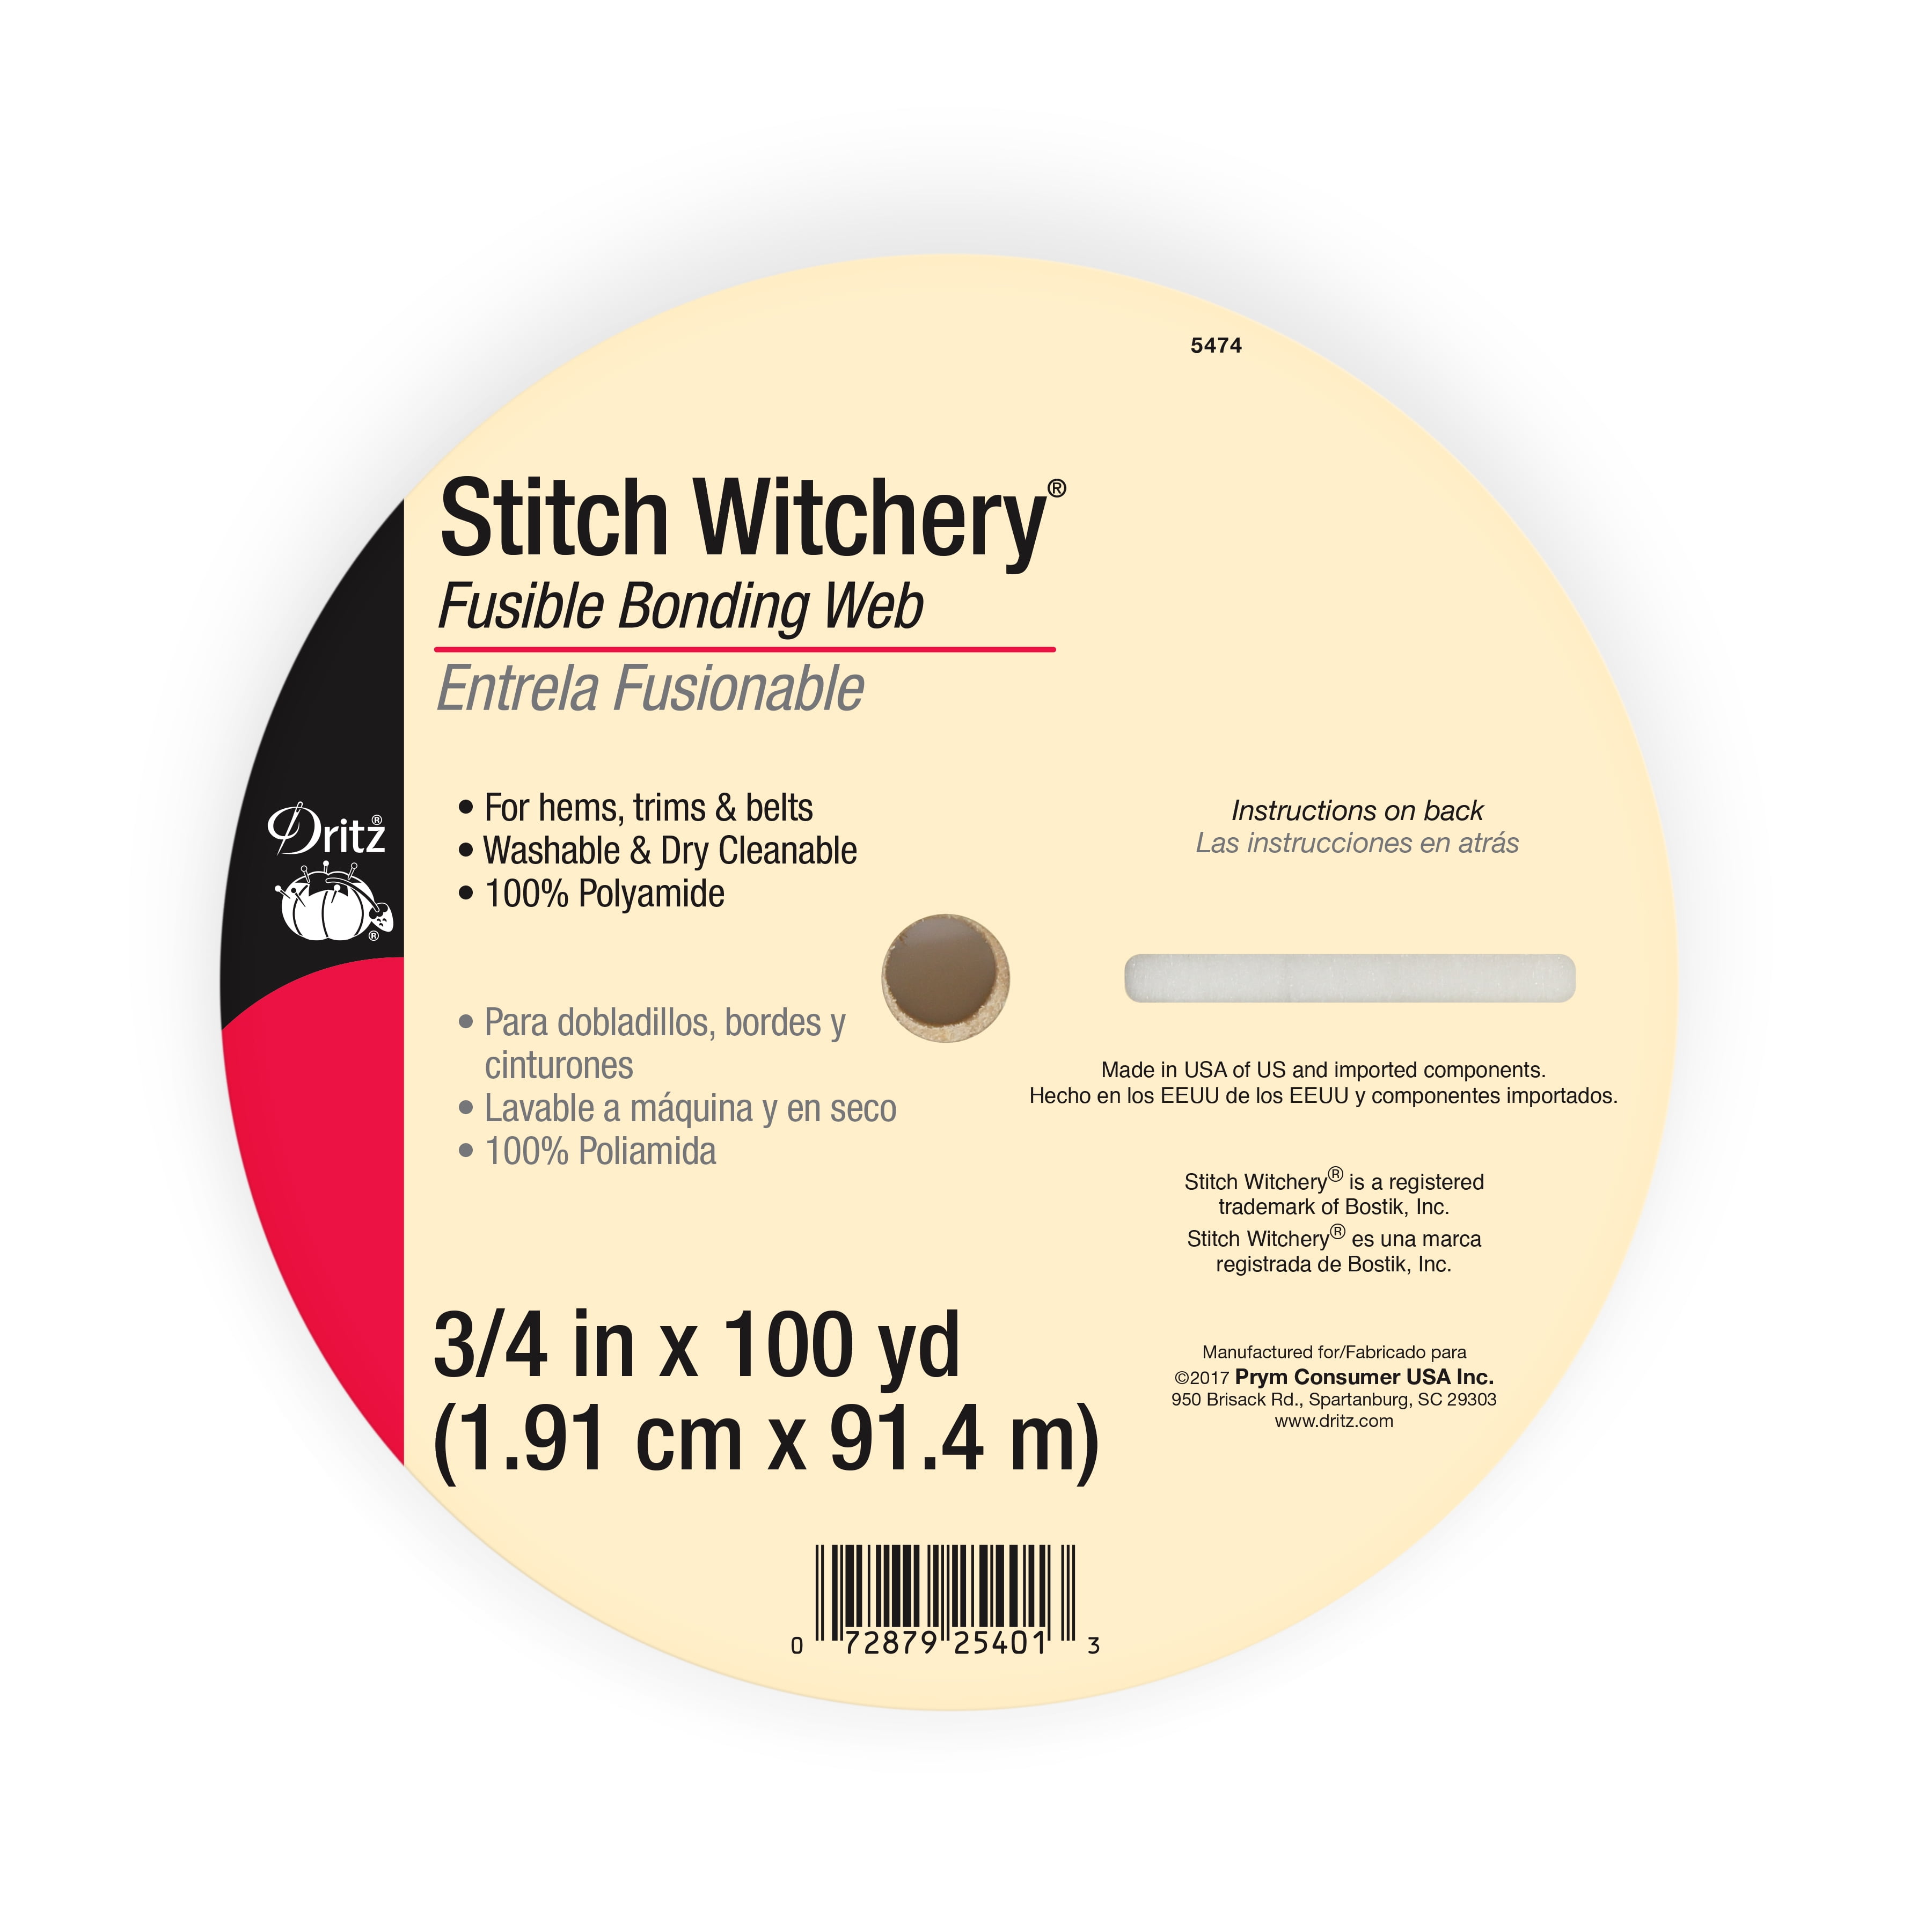  Stitch Witchery Fusible, 5/8, Regular Weight, 1 Roll, Black  Bonding Web, 5/8-Inch X 13-Yards